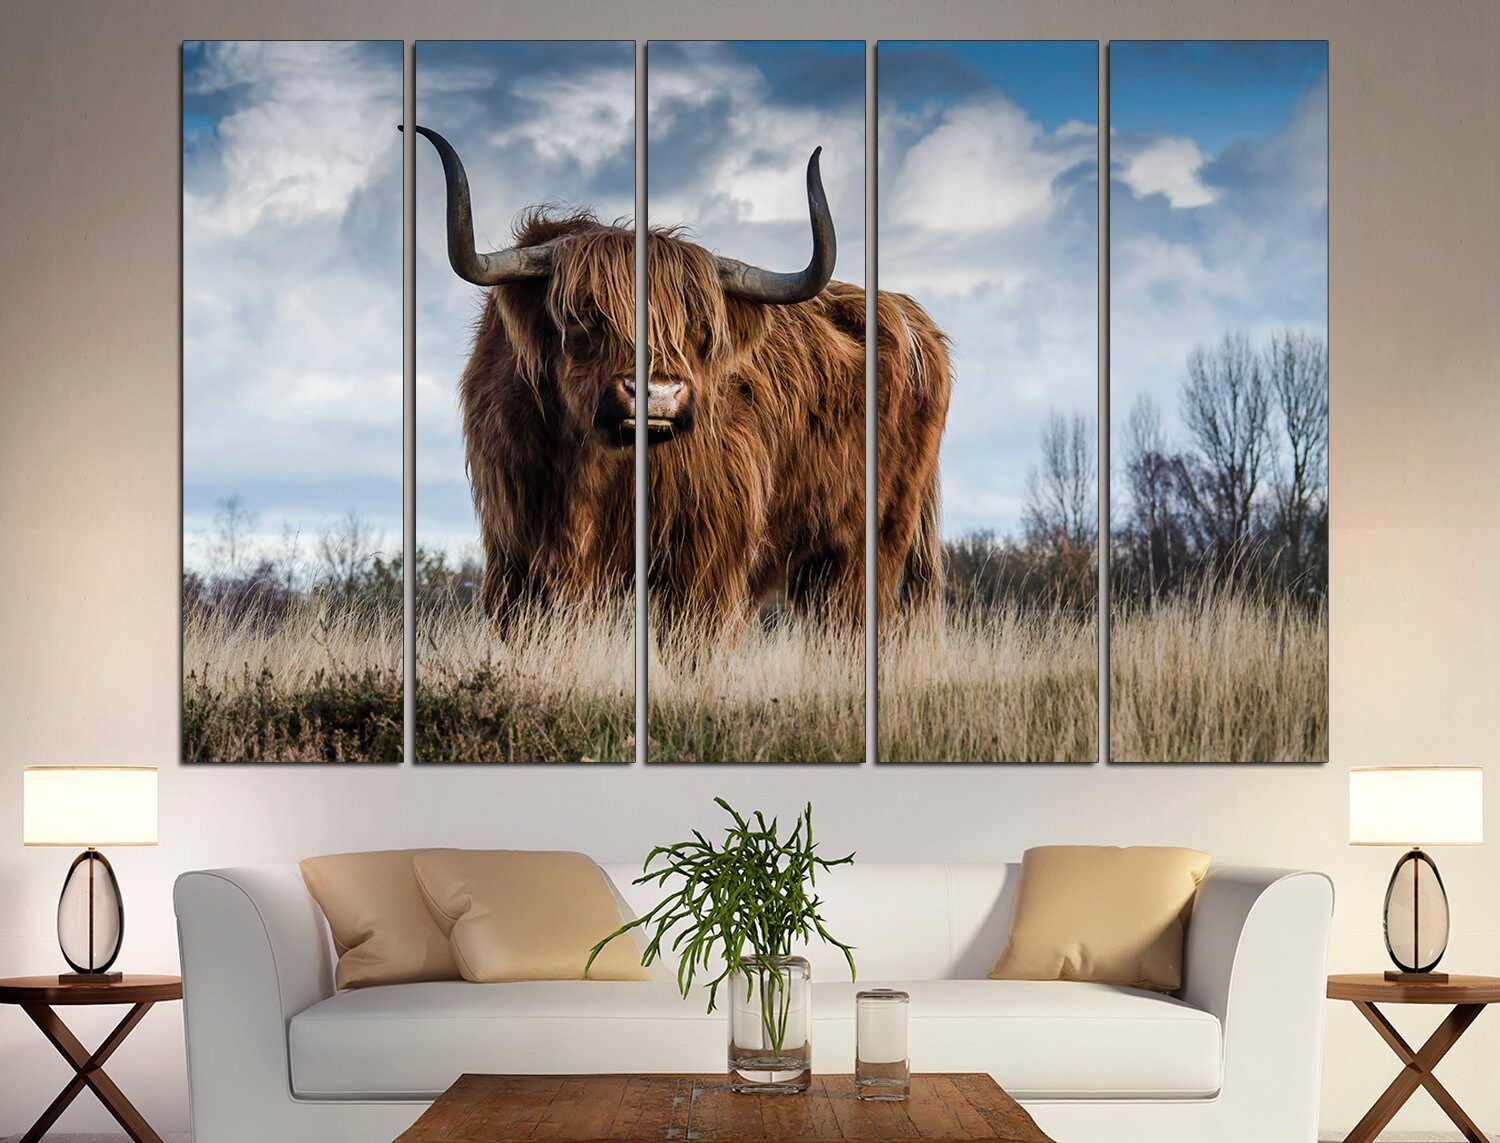 Texas Longhorn Large Wall Art Highland Cow Print, Cow Art Print Farmhouse Wall Decor Housewarming Gift